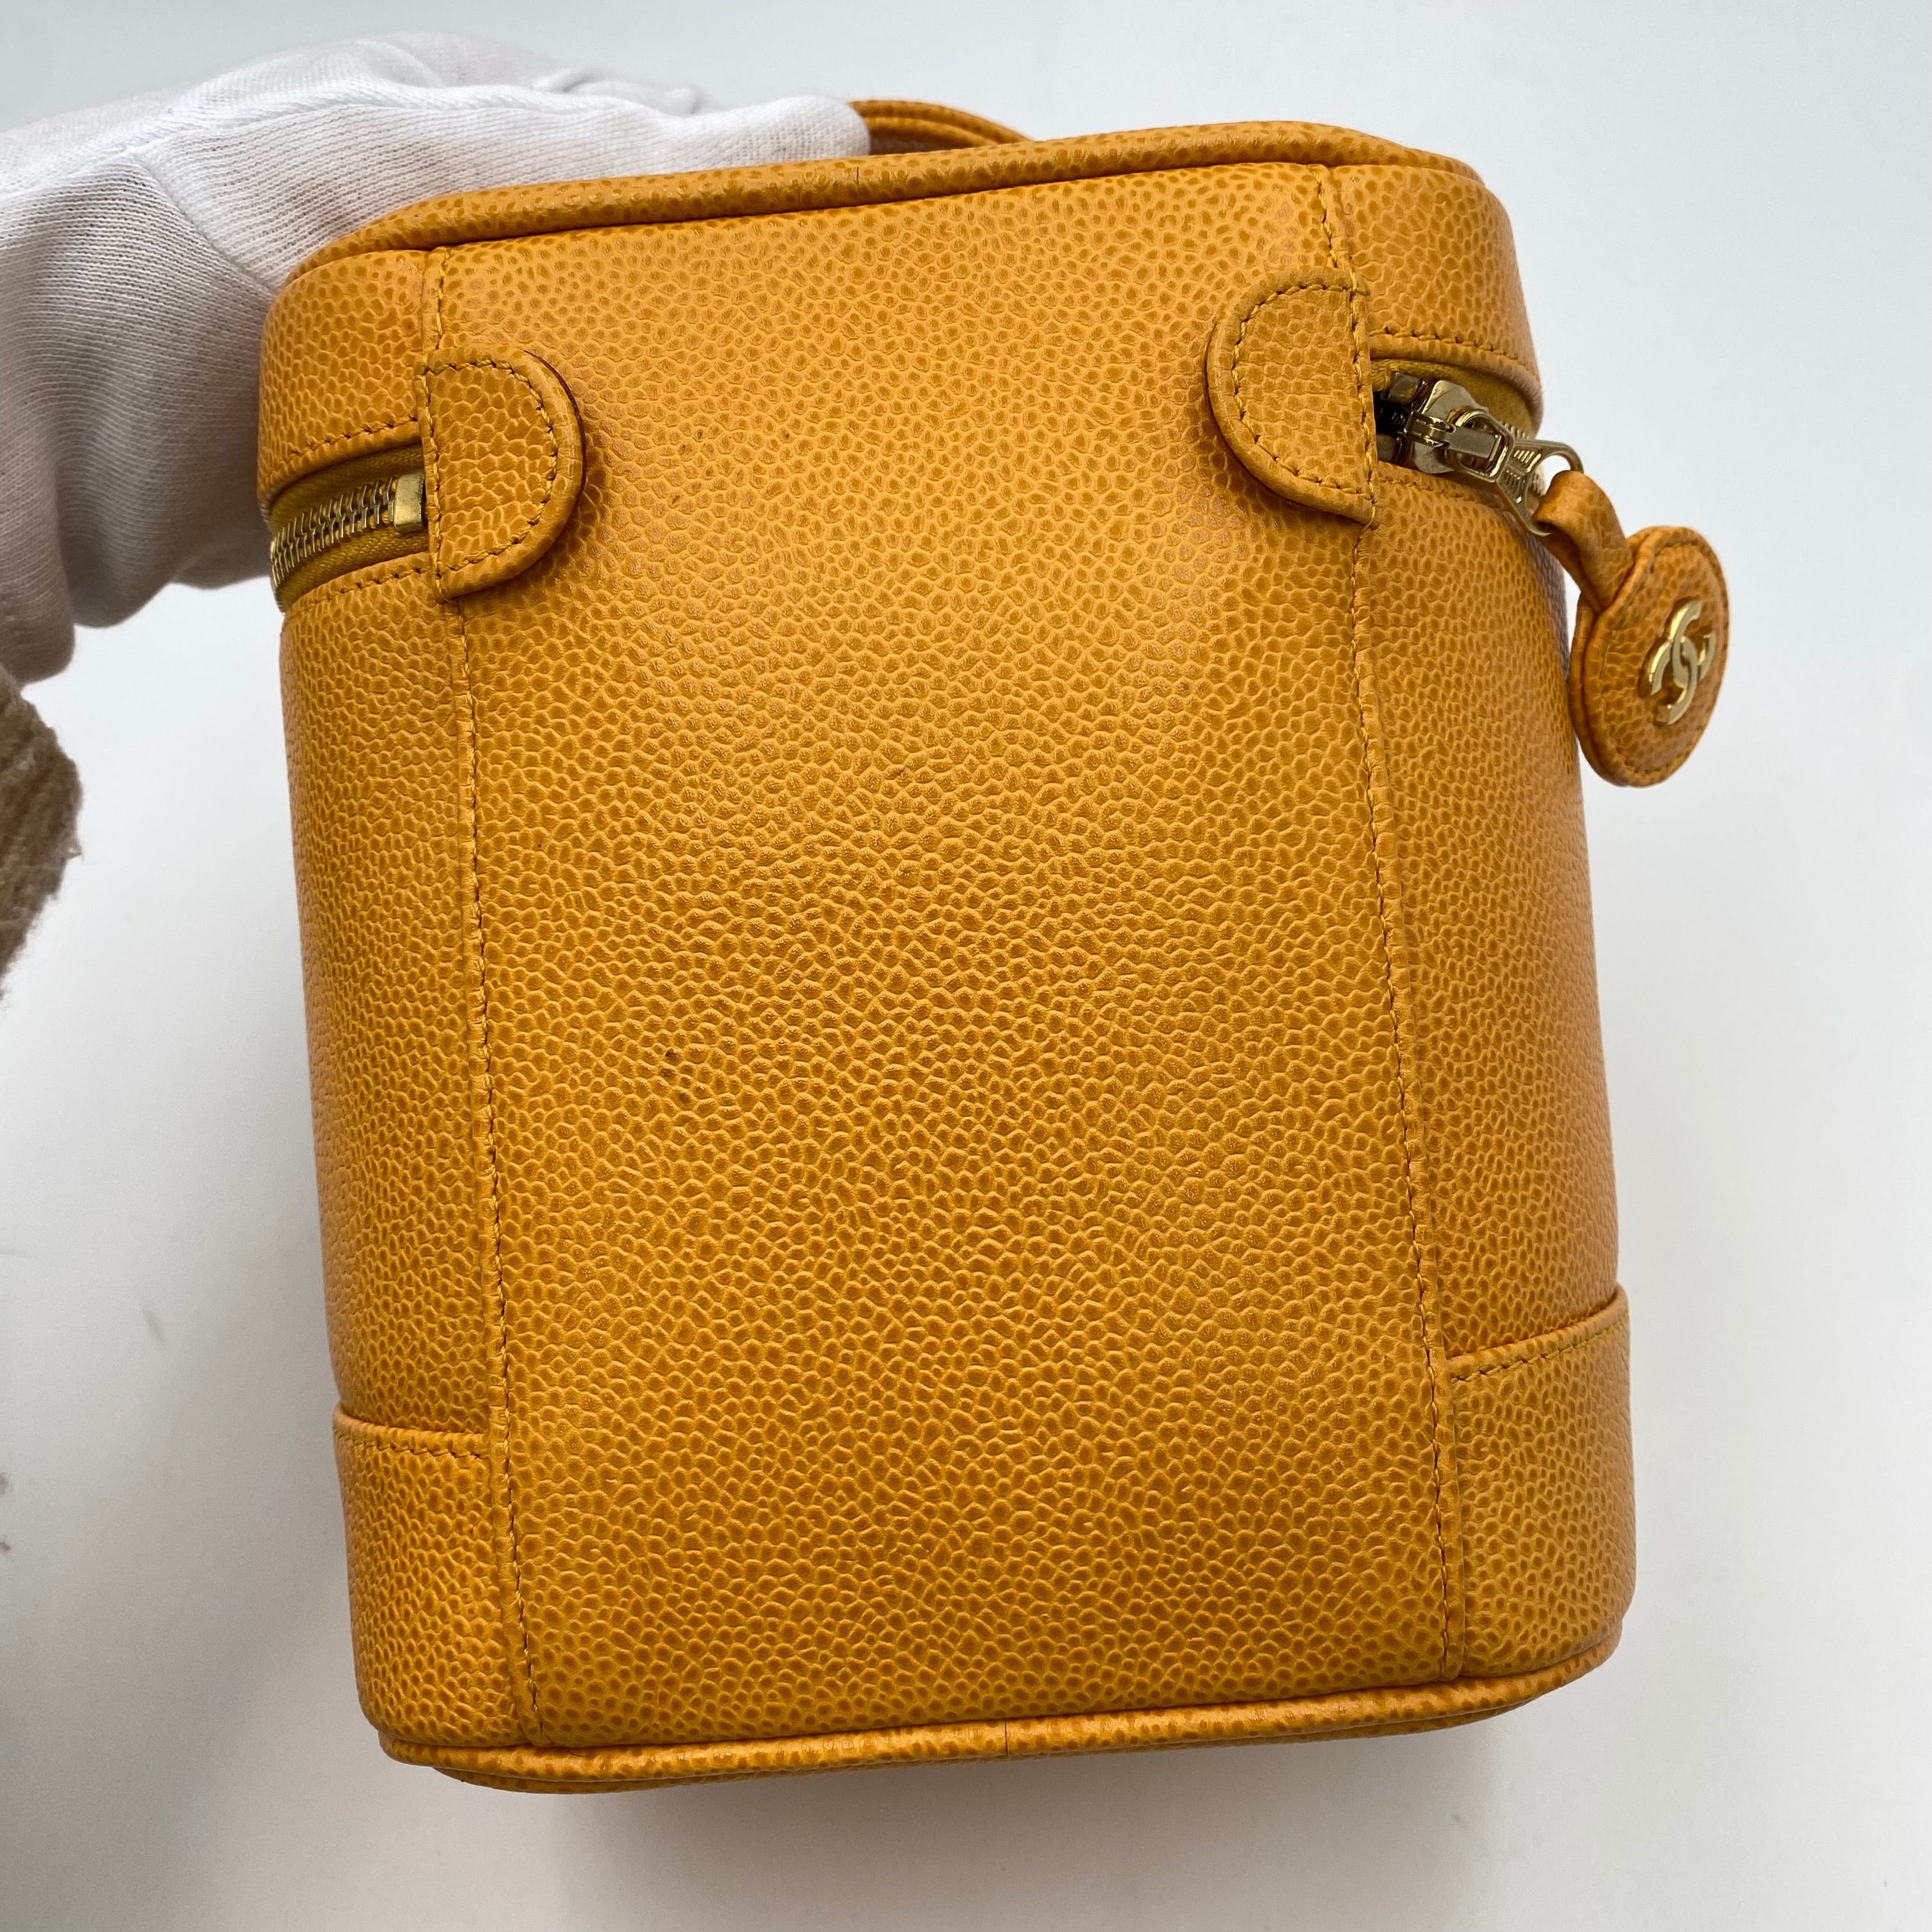 Chanel CHANEL VINTAGE VANITY HAND BAG ORANGE CAVIAR